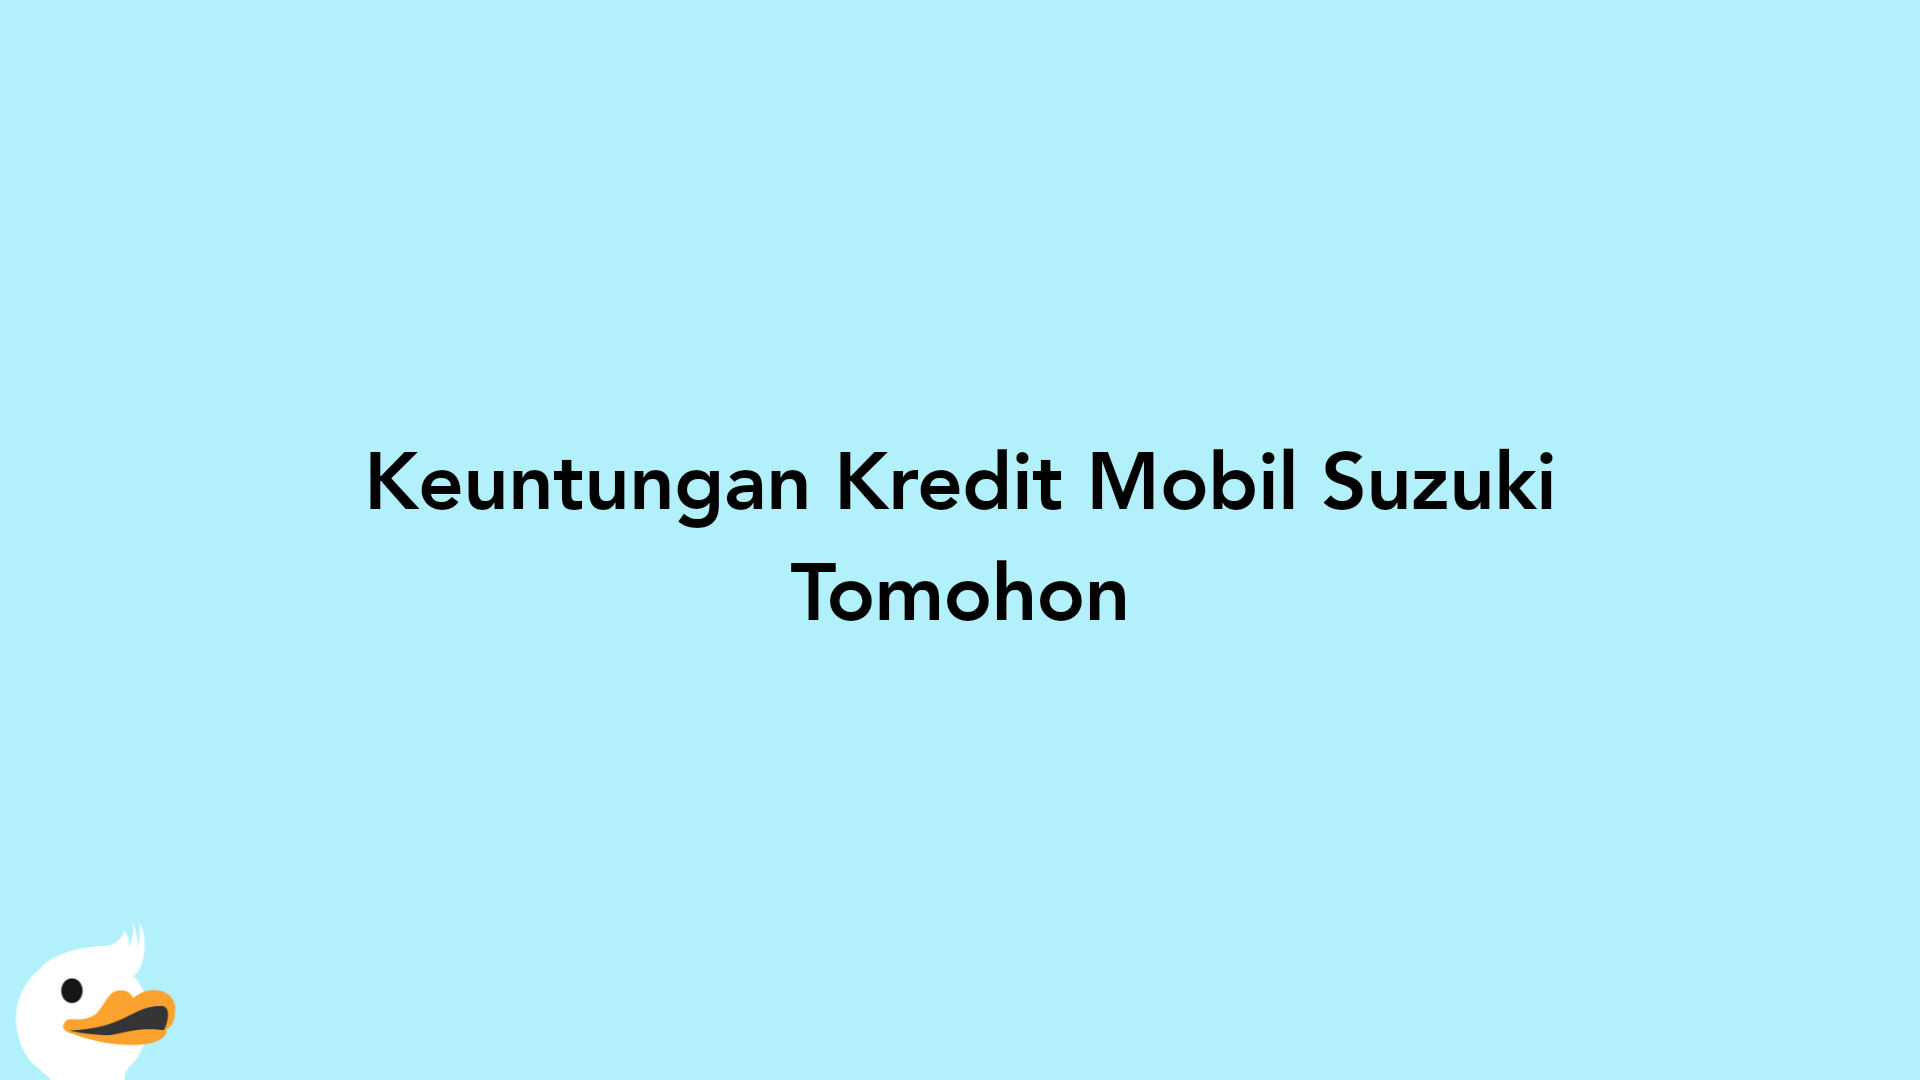 Keuntungan Kredit Mobil Suzuki Tomohon